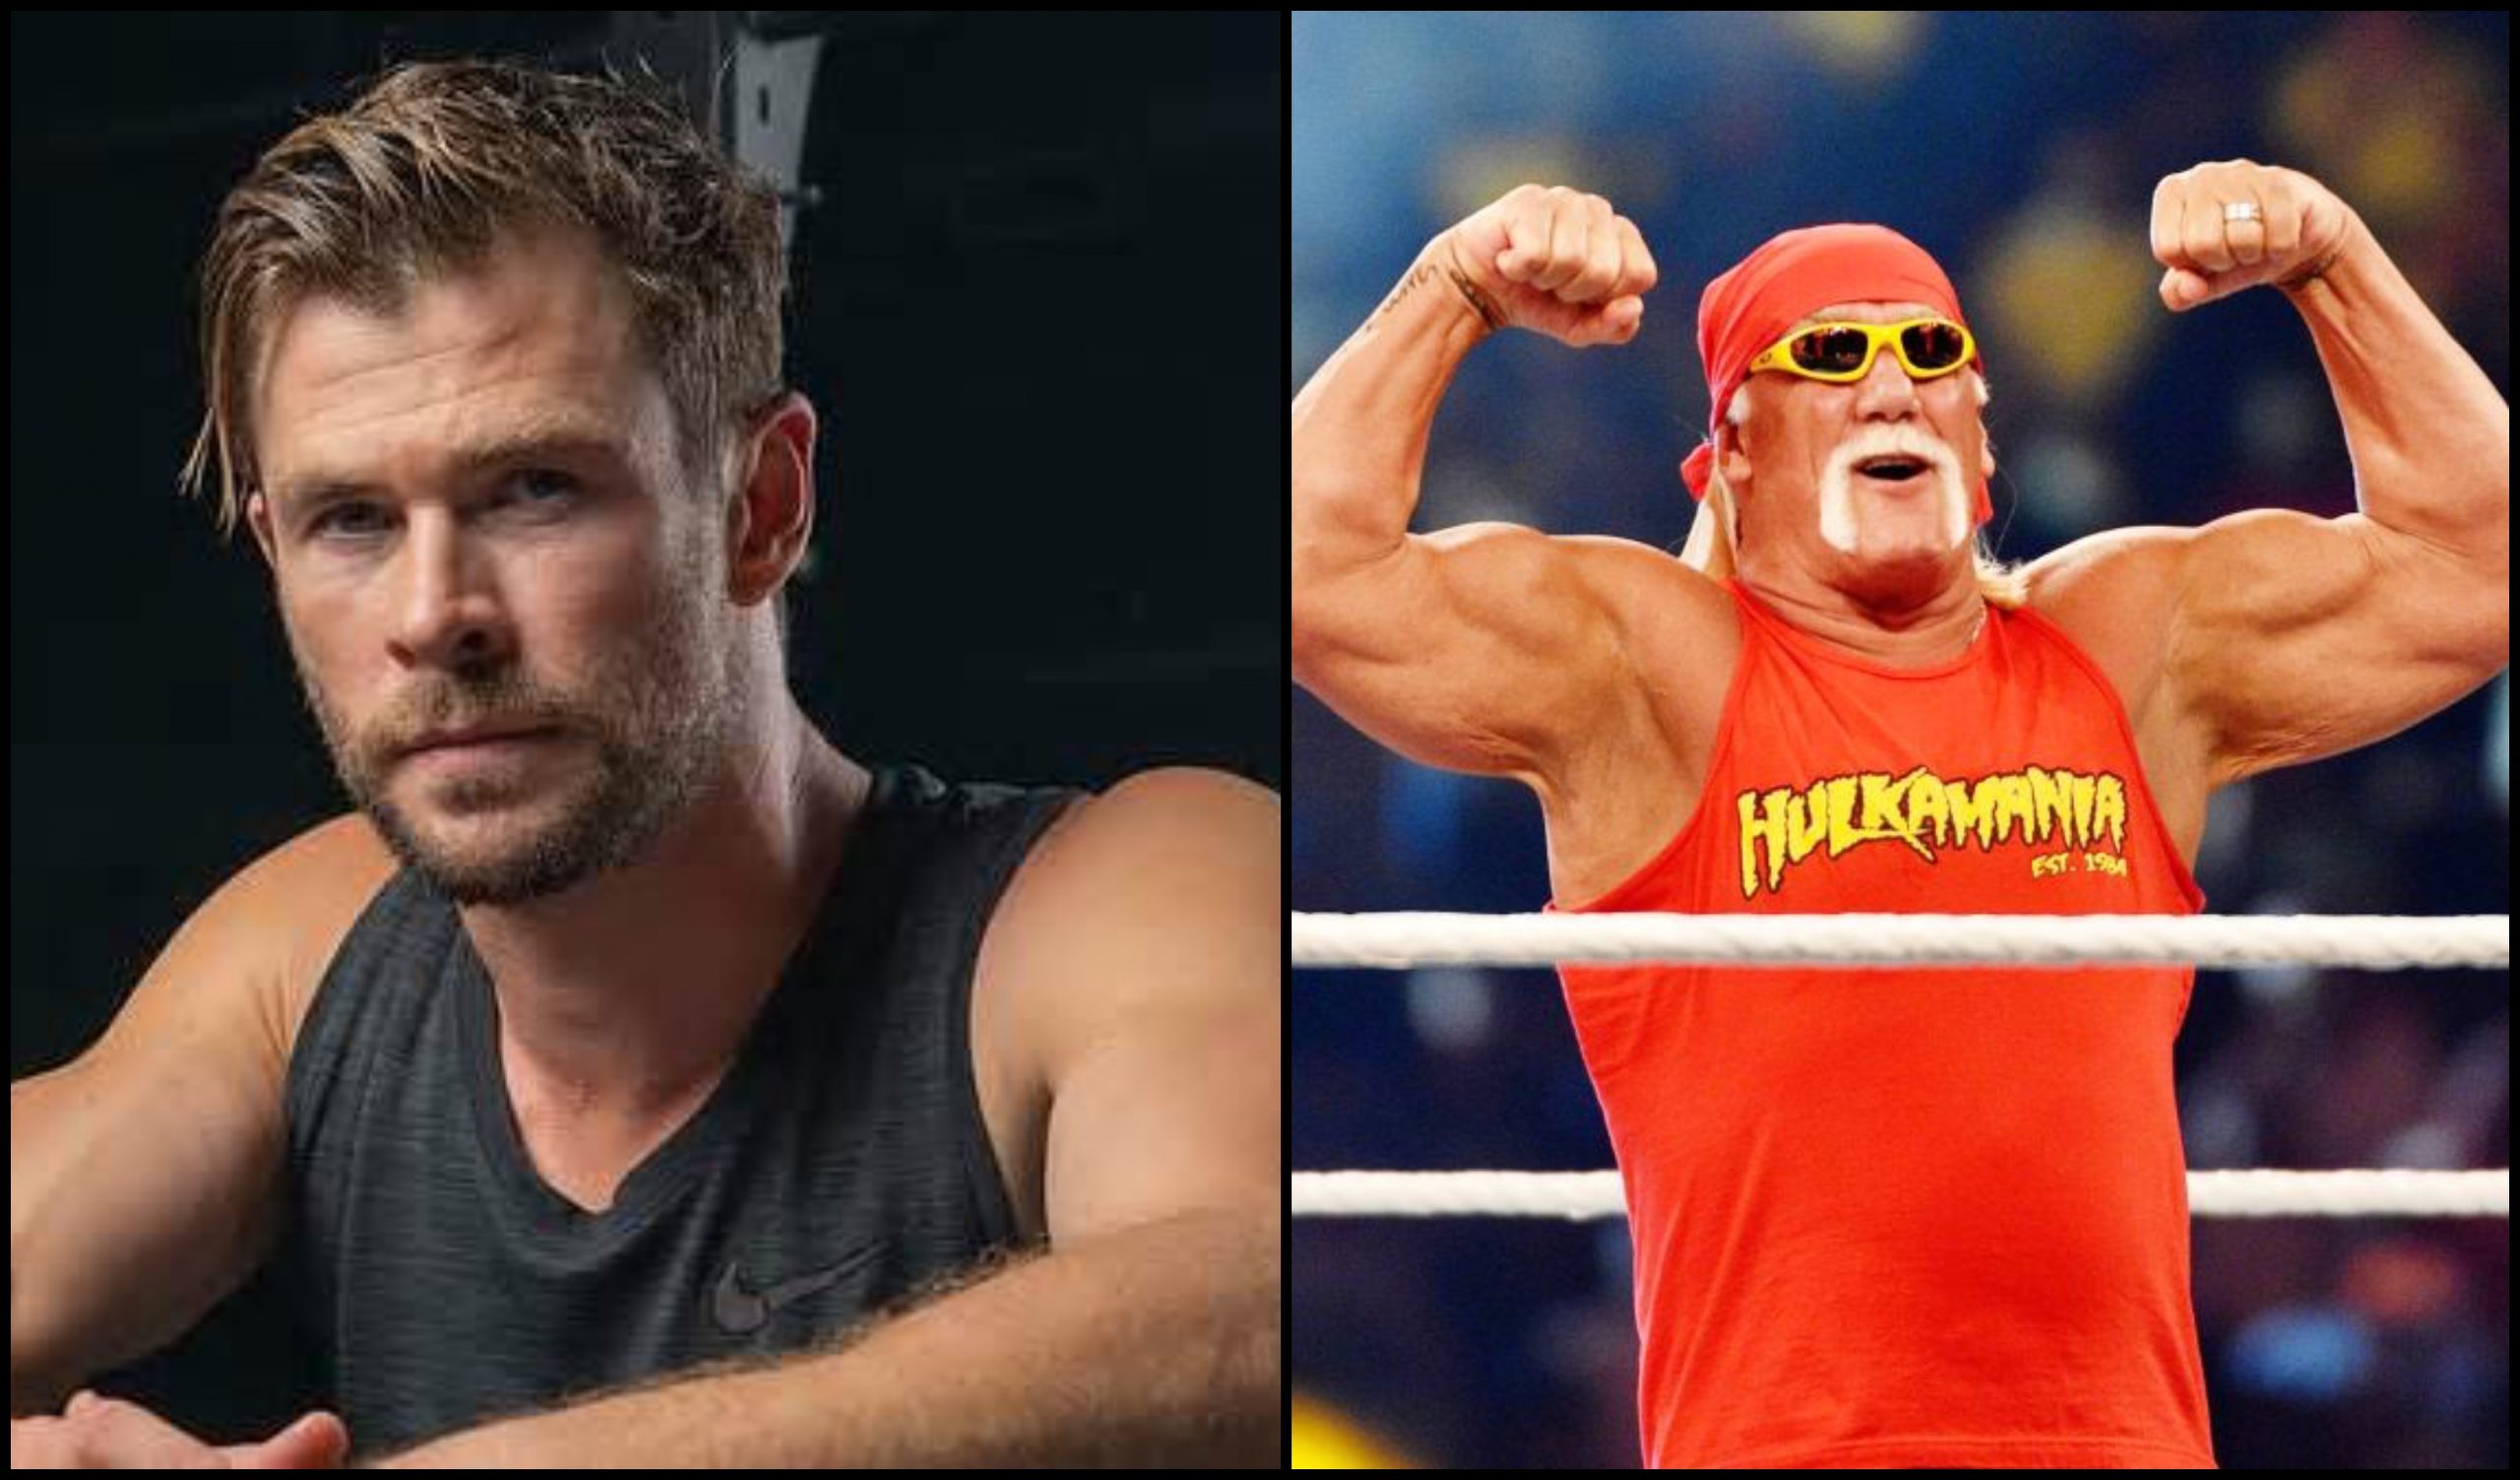 Chris Hemsworth Will Portray WWE’s Hulk Hogan in New Biopic